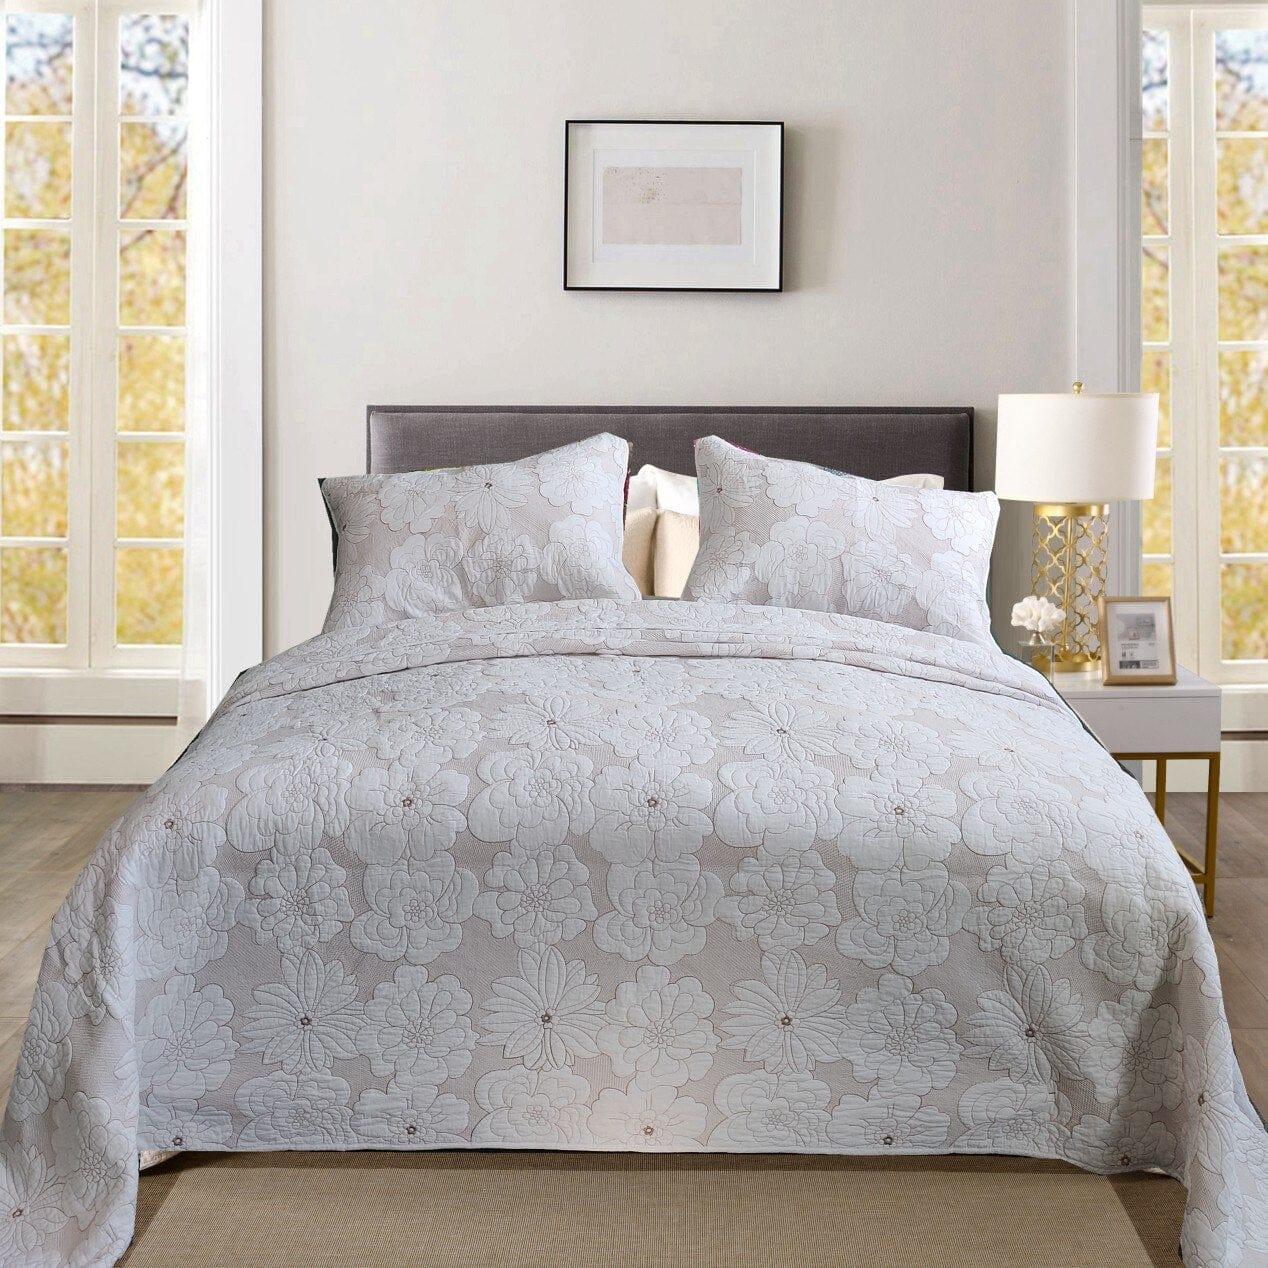 Shop 0 Color 2 / 230X250cm 3Pcs Premium Quilted Cotton Bedspread Coverlet Set Beige Embroidery  Chic Floral Comforter Bed Cover set 2 Pillow shams Mademoiselle Home Decor